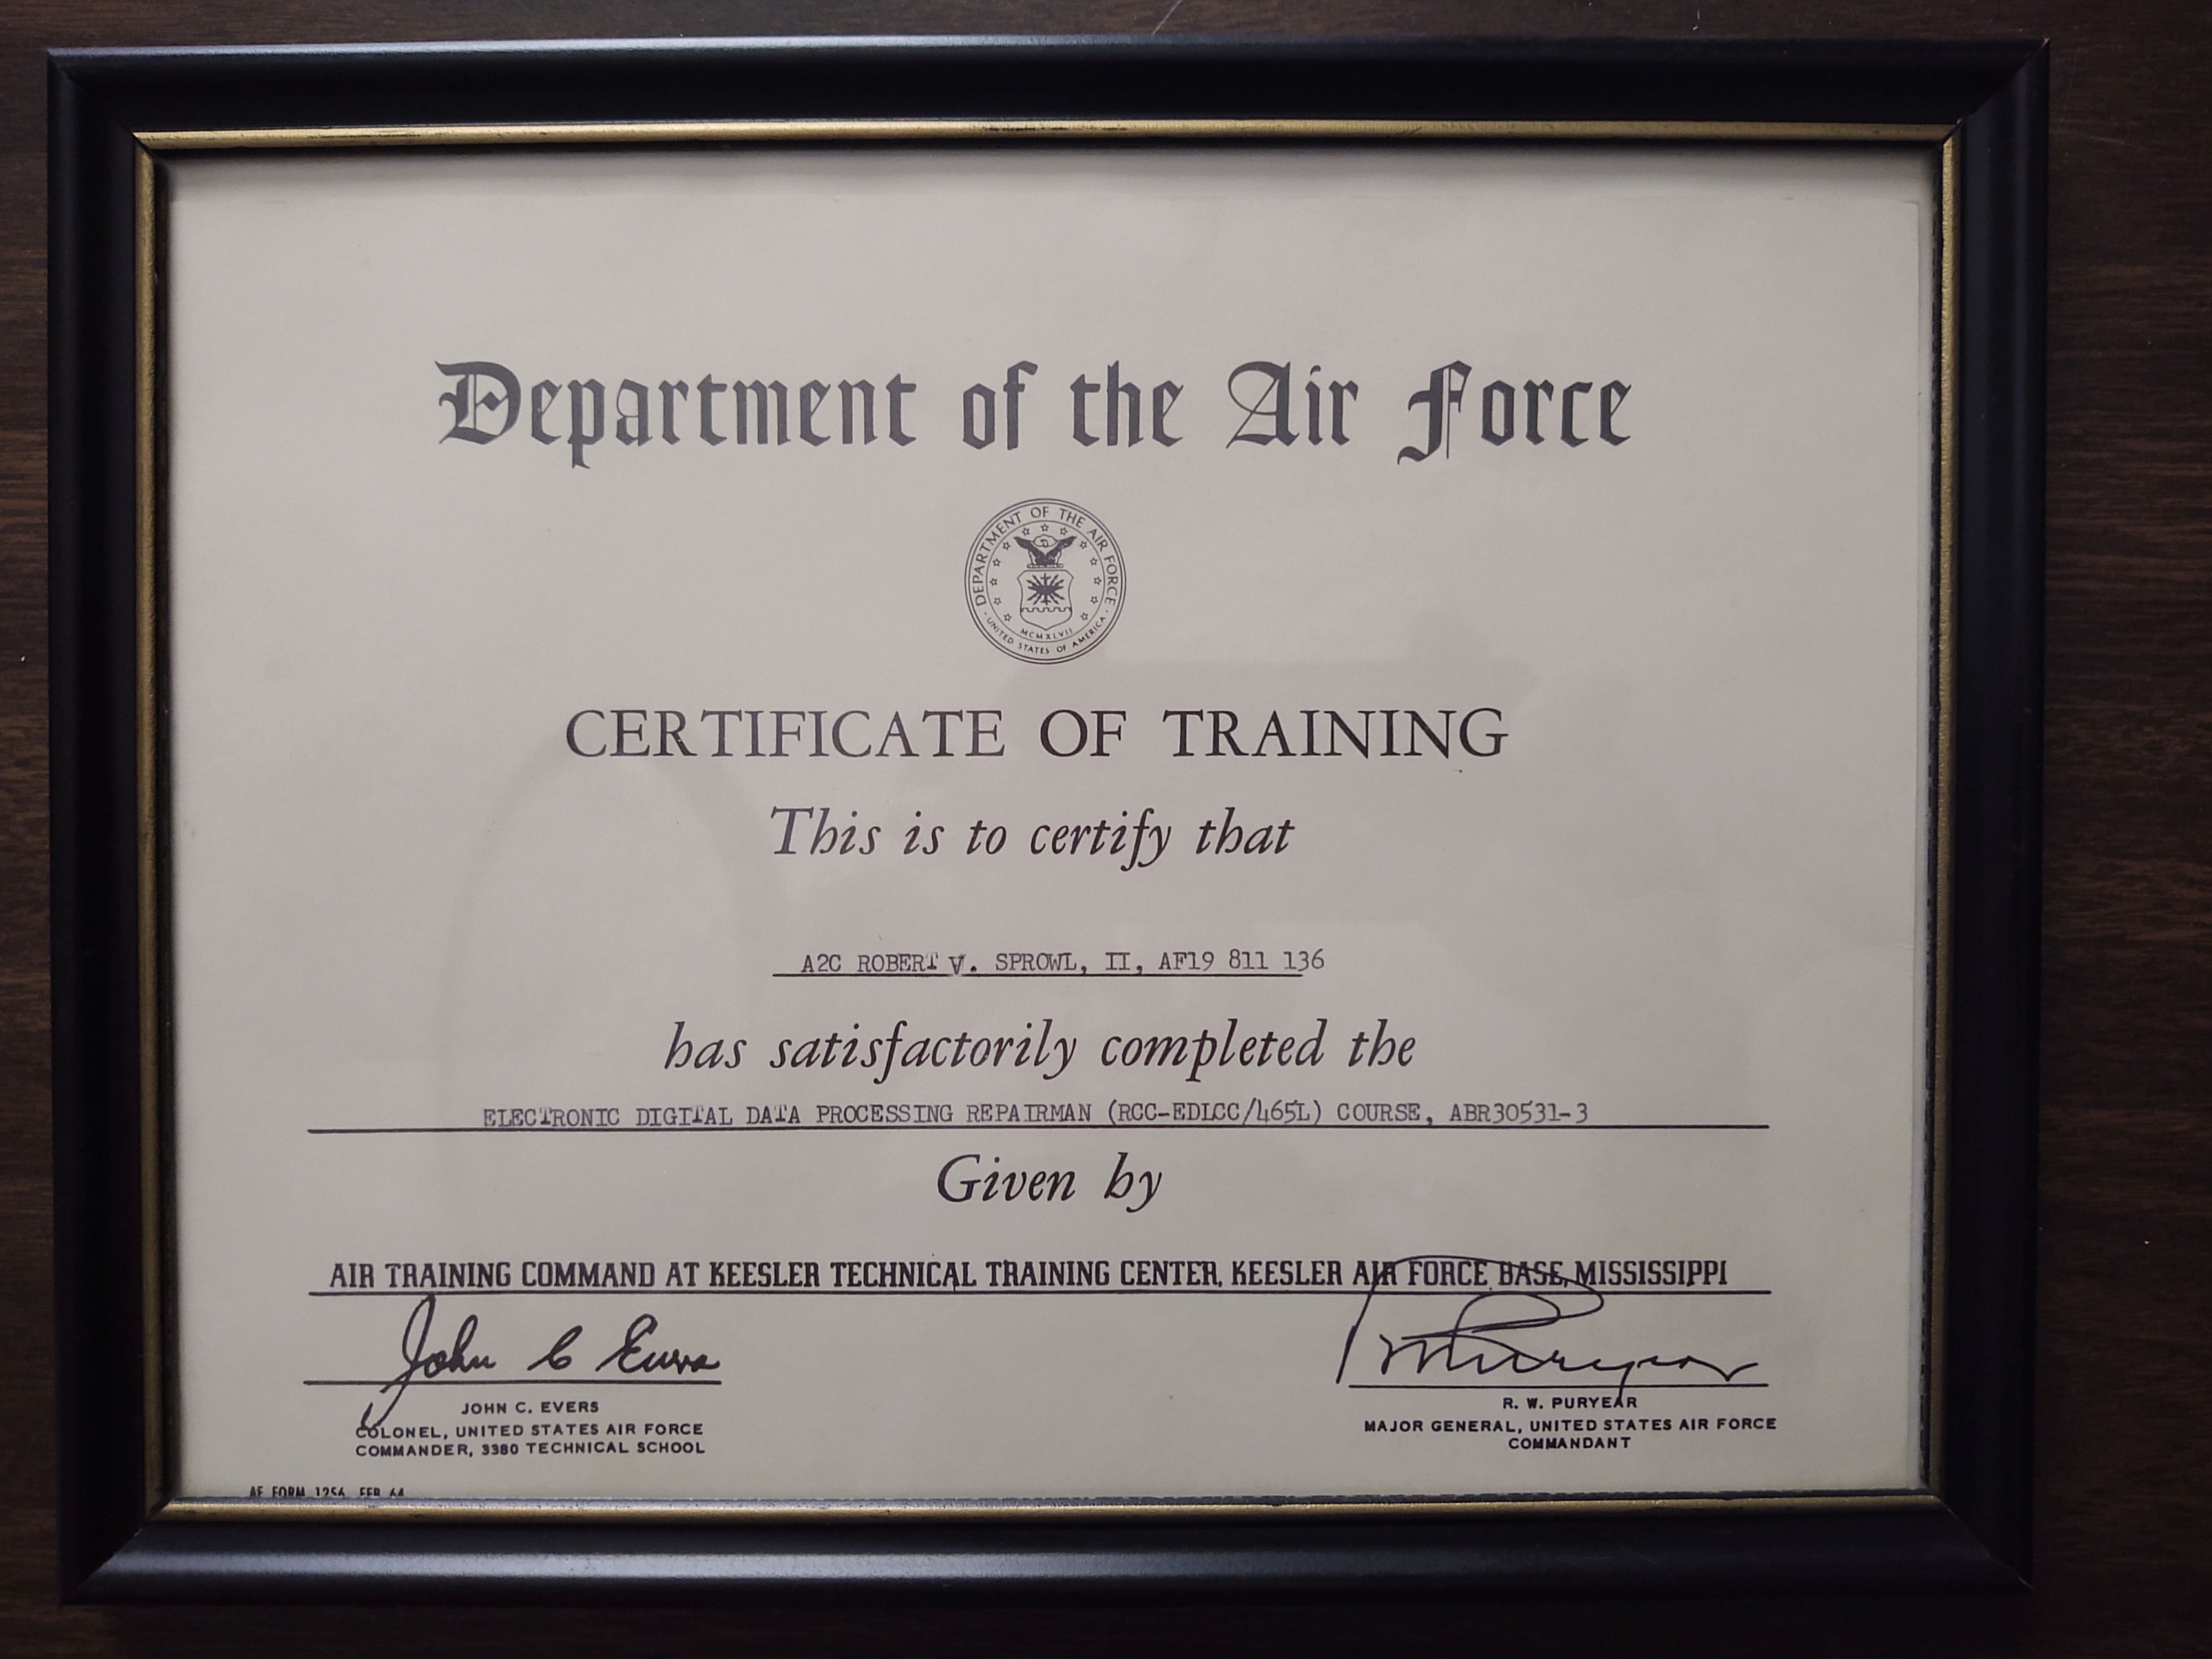 Technician training certificate.